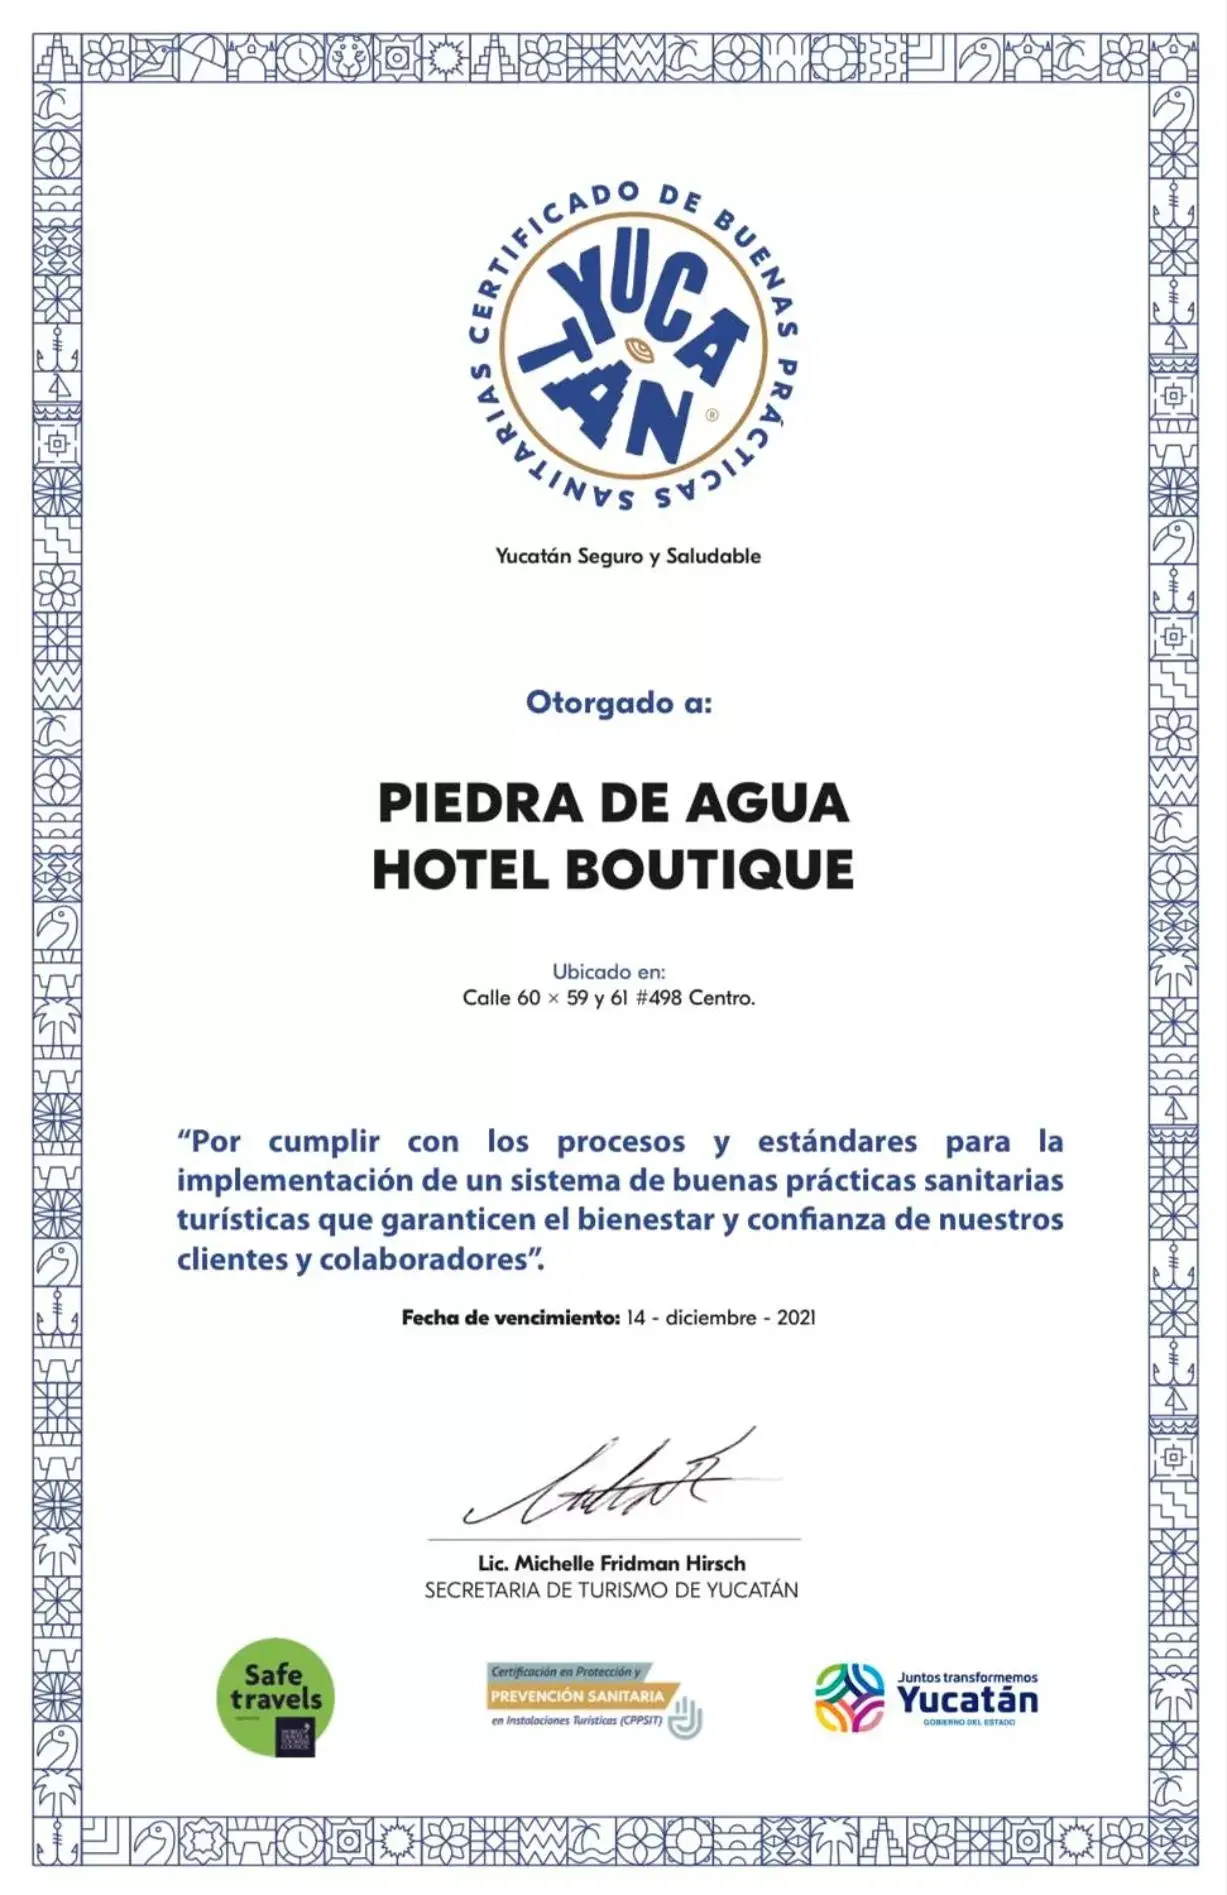 Logo/Certificate/Sign in Piedra de Agua Merida